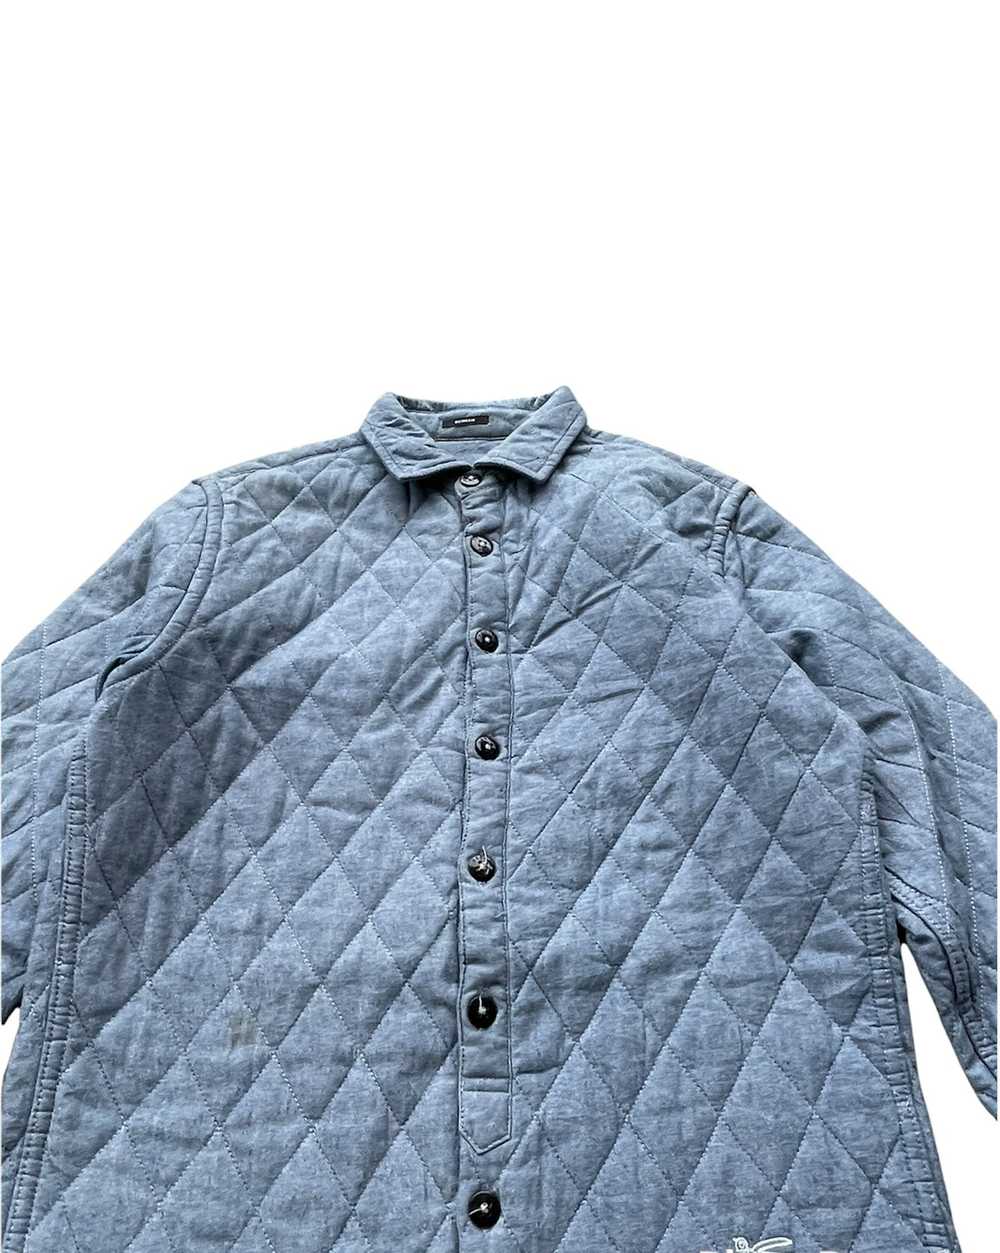 Denham × Designer Denham Diamond Quilted Shirt - image 3